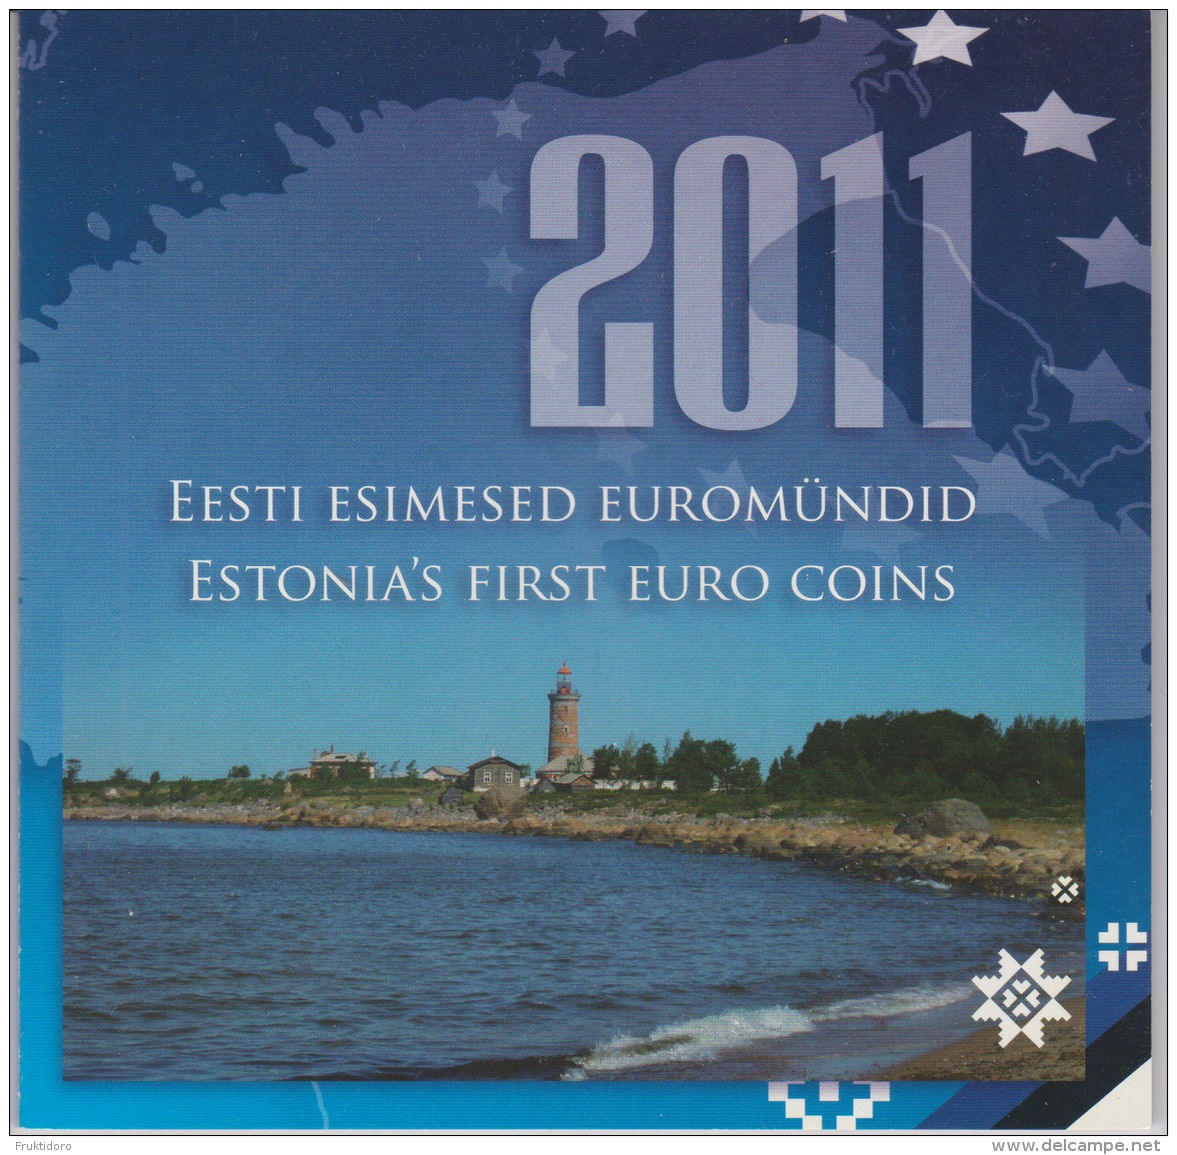 Coin Estonia Coinage 2011 / II 0.01 - 2  Euro UNC - Estonia's First Euro Coins - Estonia